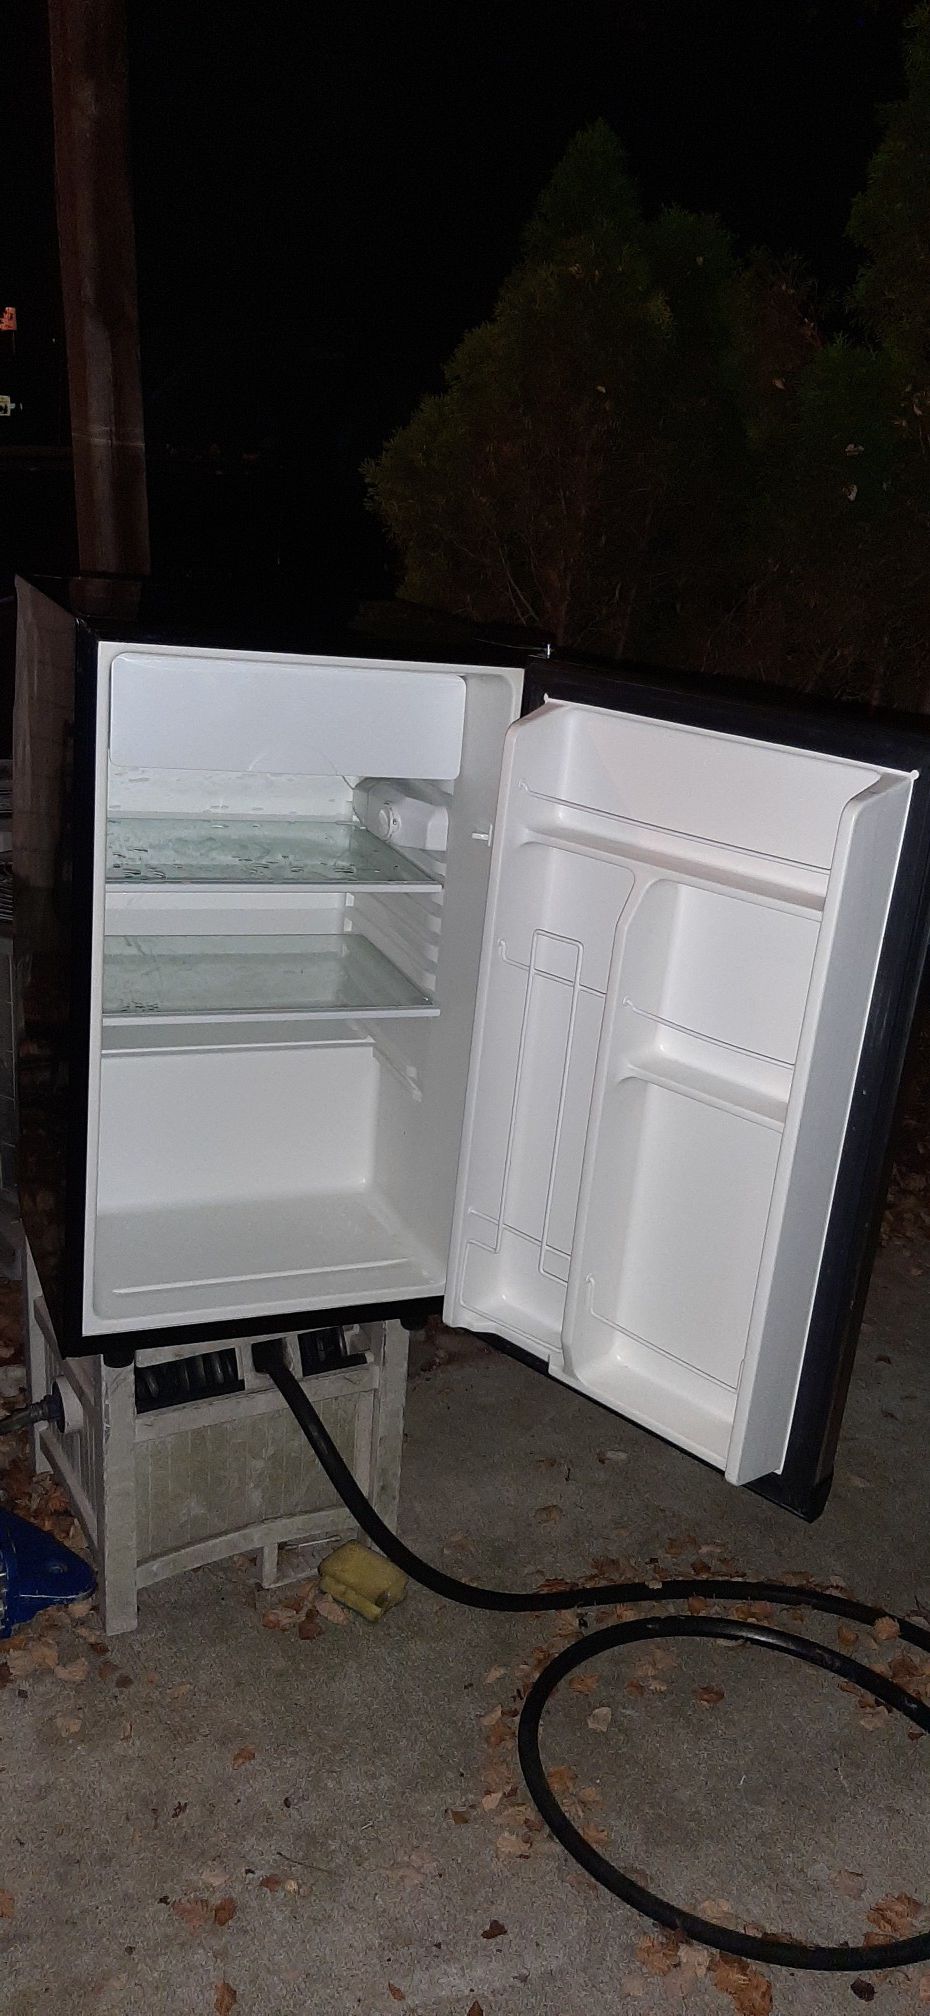 RCA RFR321-FR320/8 IGLOO Mini Refrigerator, 3.2 Cu Ft Fridge, Stainless Steel